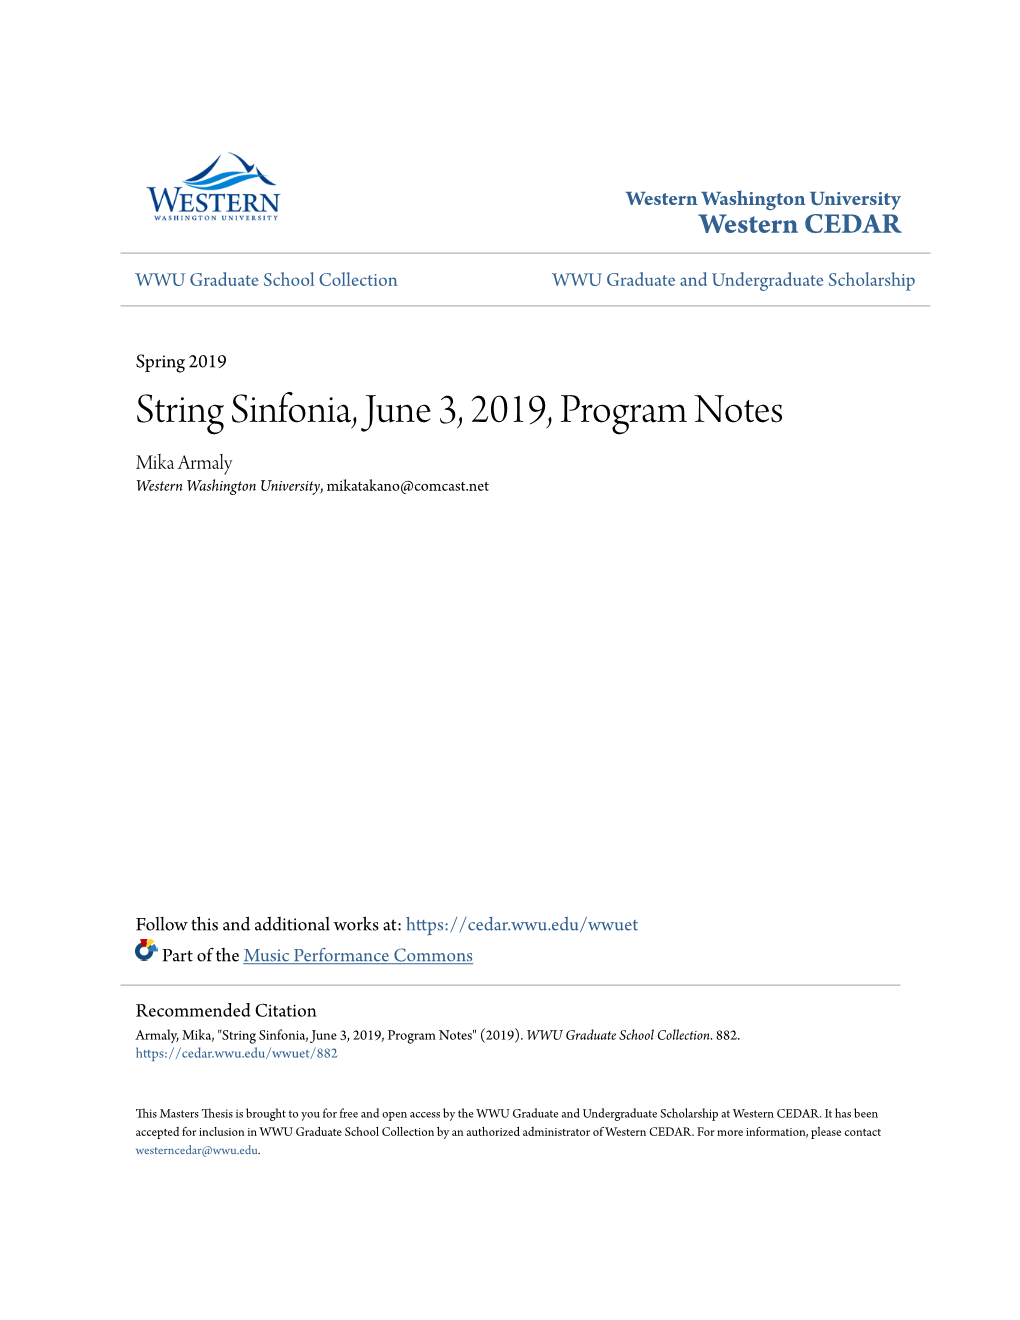 String Sinfonia, June 3, 2019, Program Notes Mika Armaly Western Washington University, Mikatakano@Comcast.Net